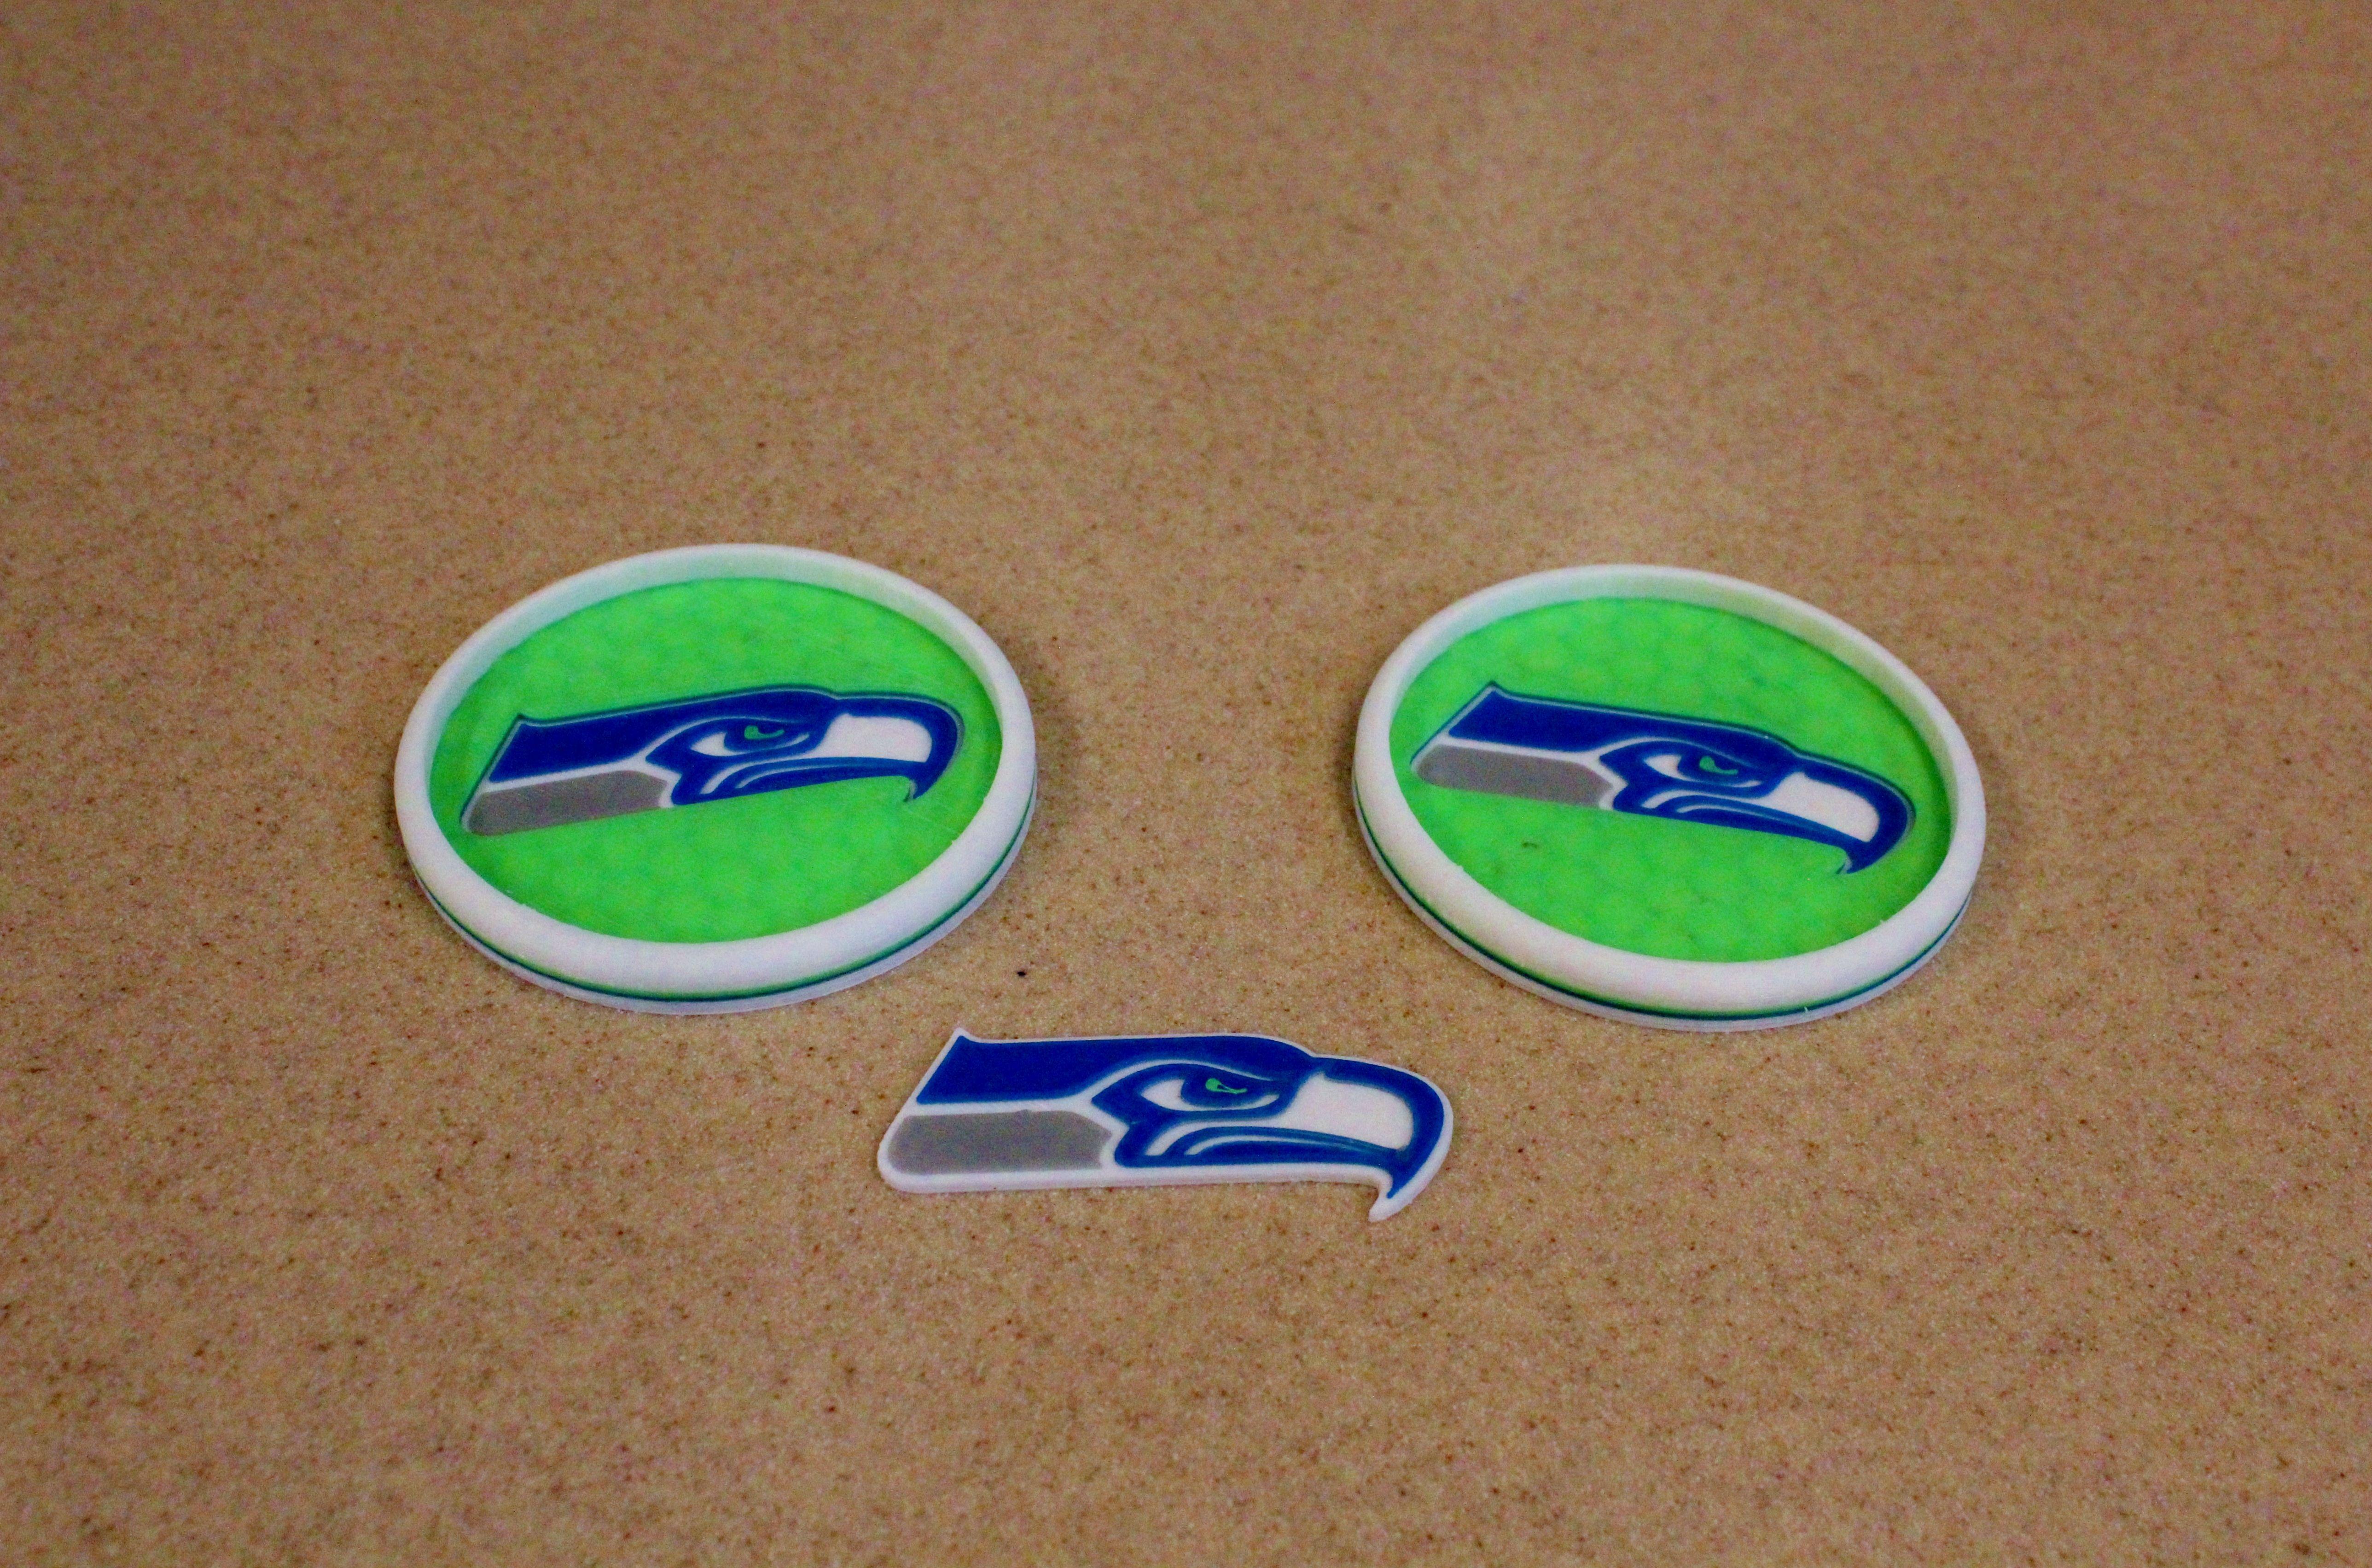 Go Hawks Logo - Slightly modified Seahawks Coaster and Logo - Go Hawks! by kresty ...